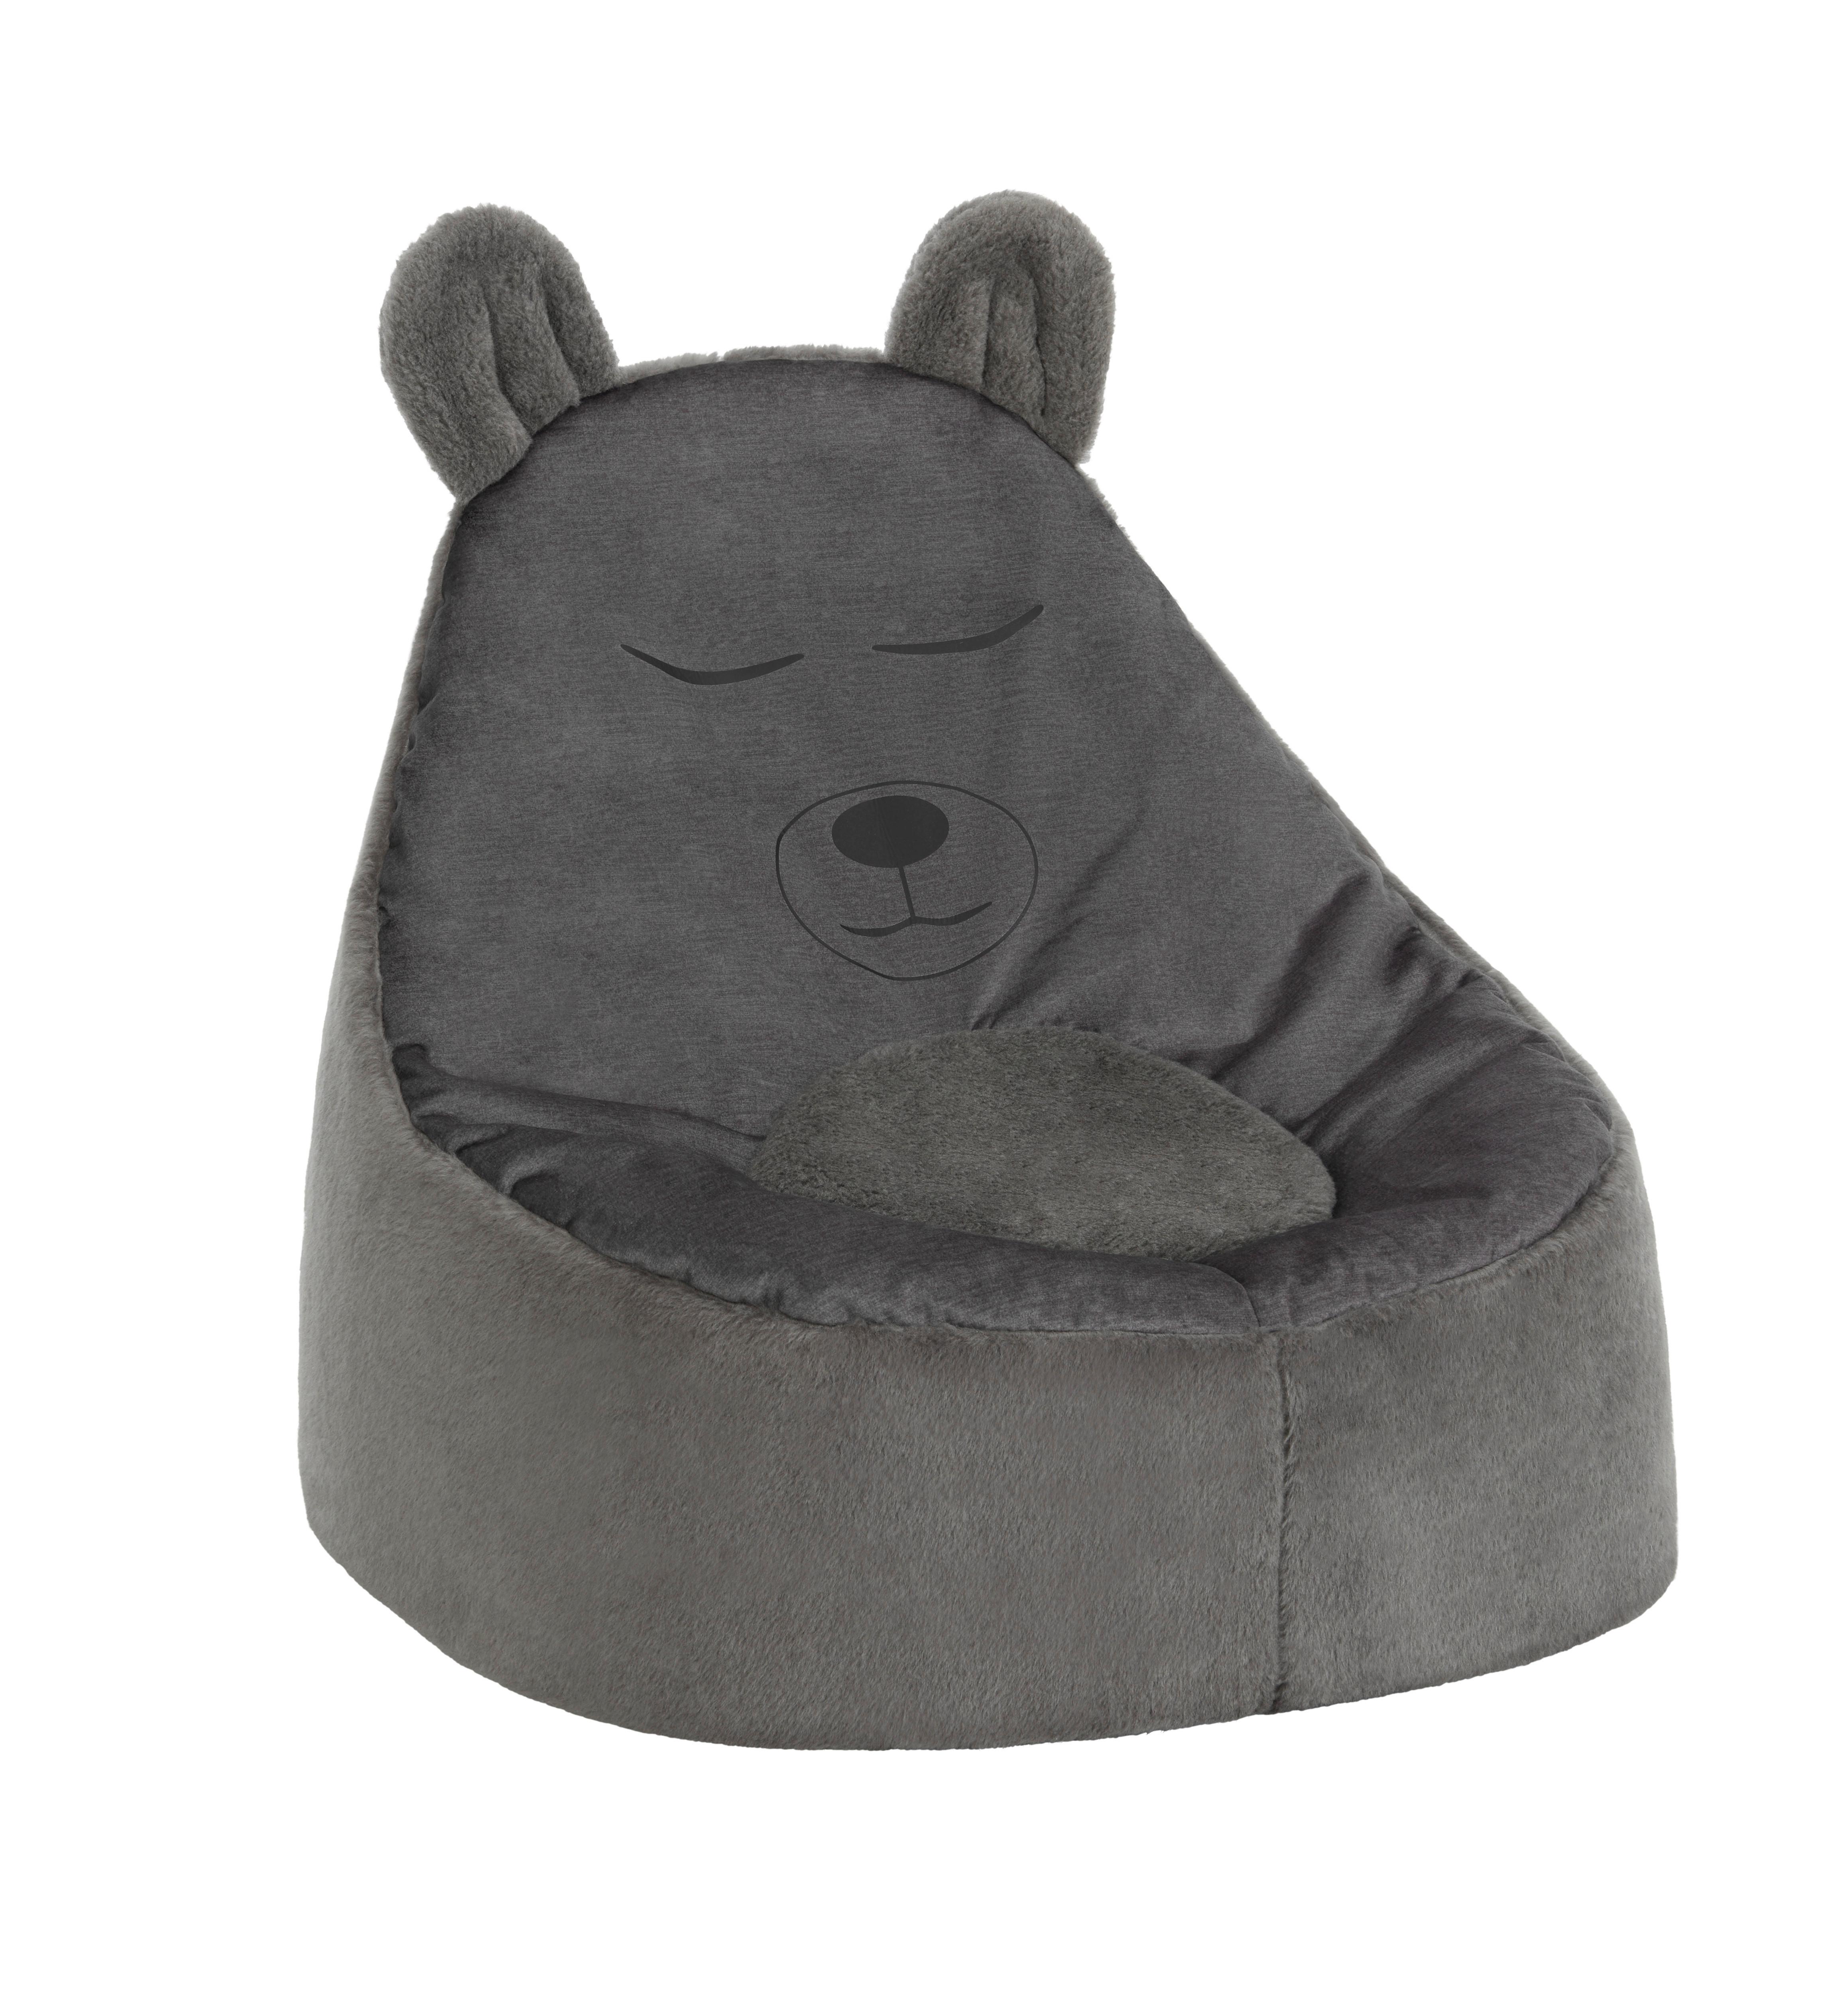 Gyerekfotel Maci Forma Sleeping Bear - Antracit, Textil (65/80/65cm) - Modern Living